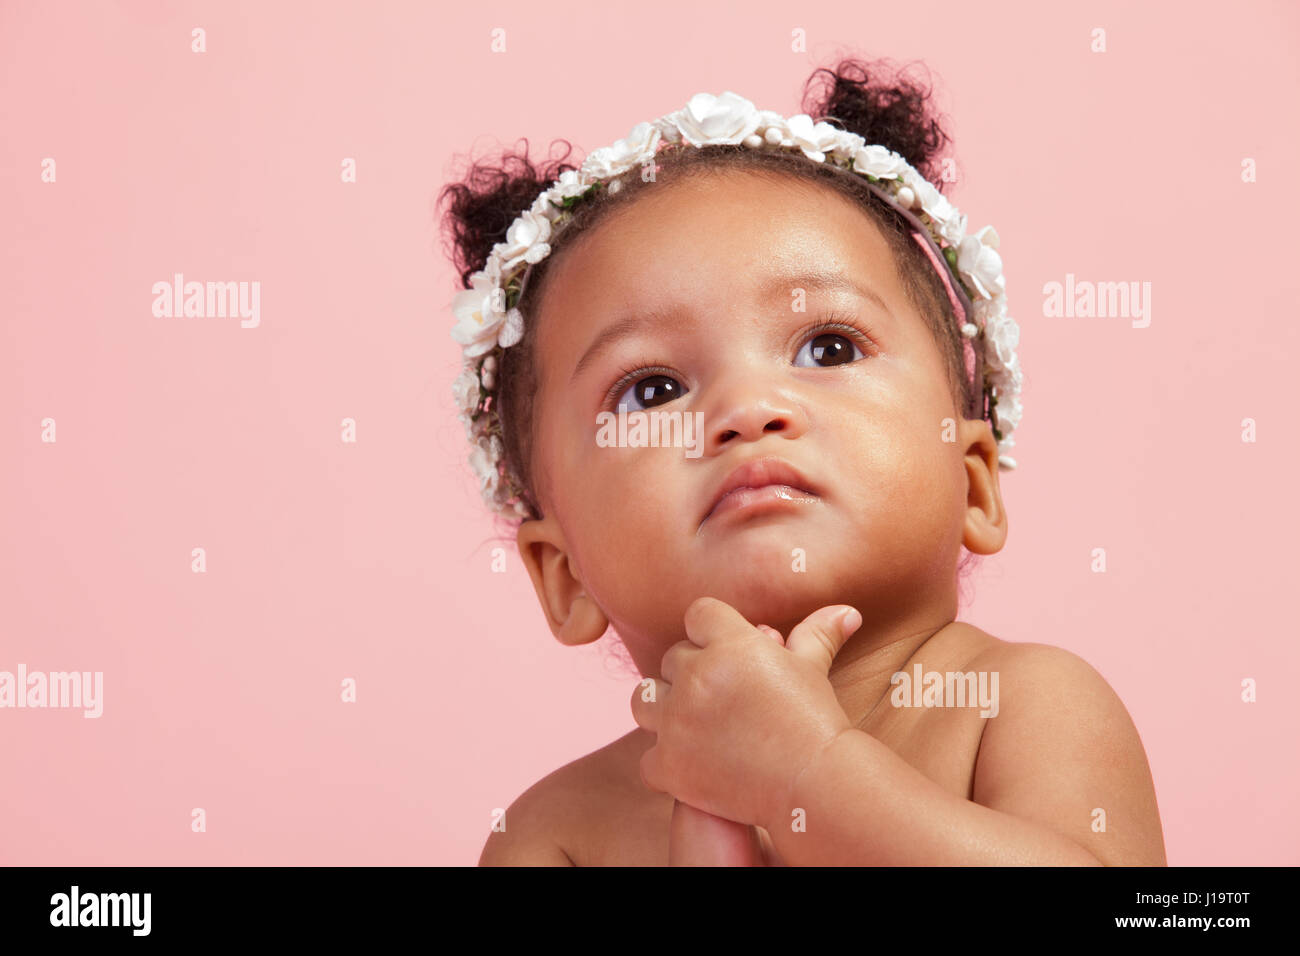 Bebé en tutú imagen de archivo. Imagen de muchacha, hermoso - 15254593